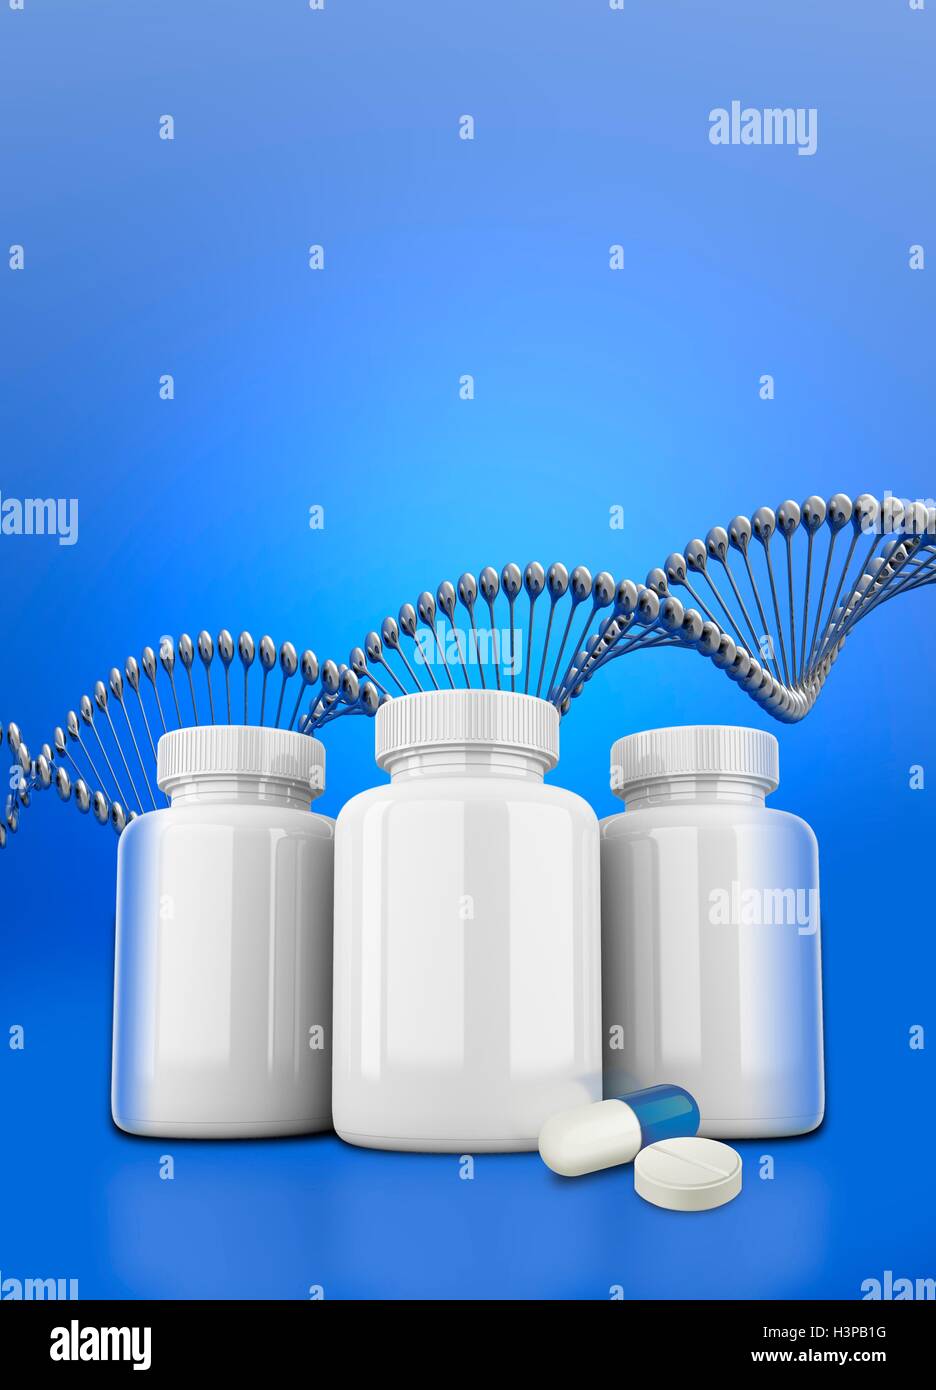 Generic drugs bottles and deoxyribonucleic acid strand, illustration. Stock Photo